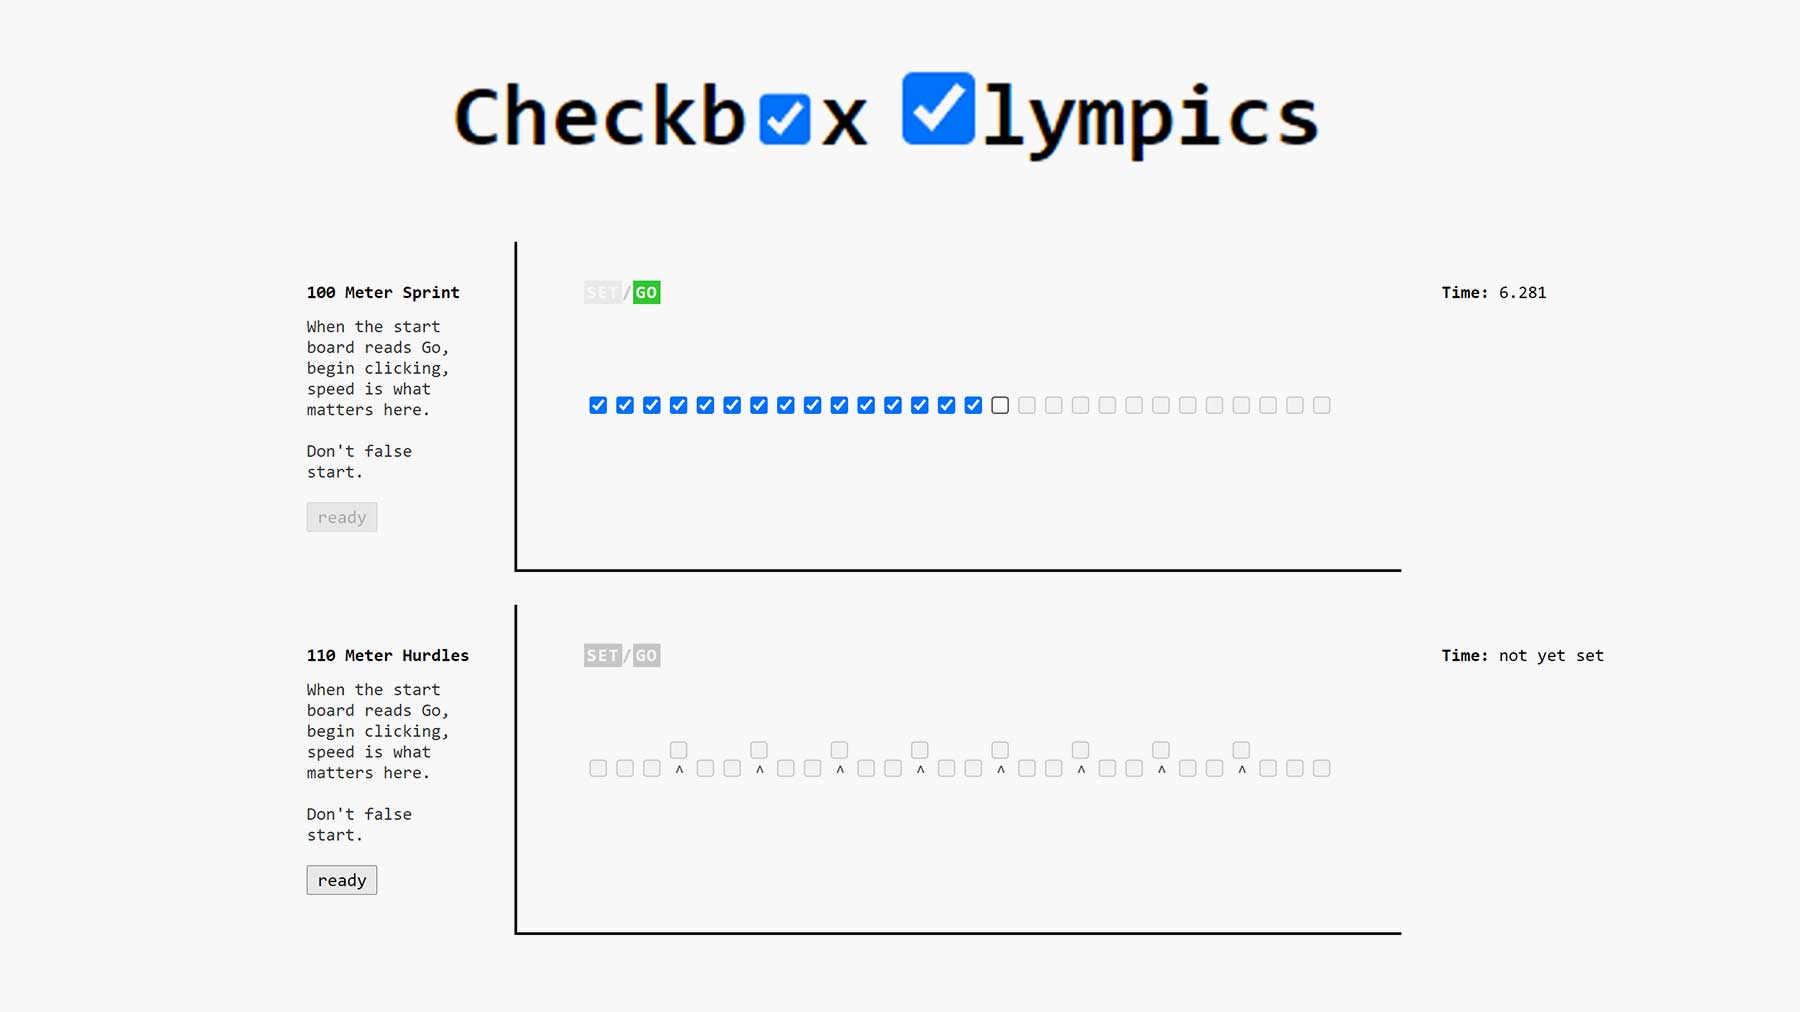 Olympische Checkbox-Spiele Checkbox-Olympics_01 